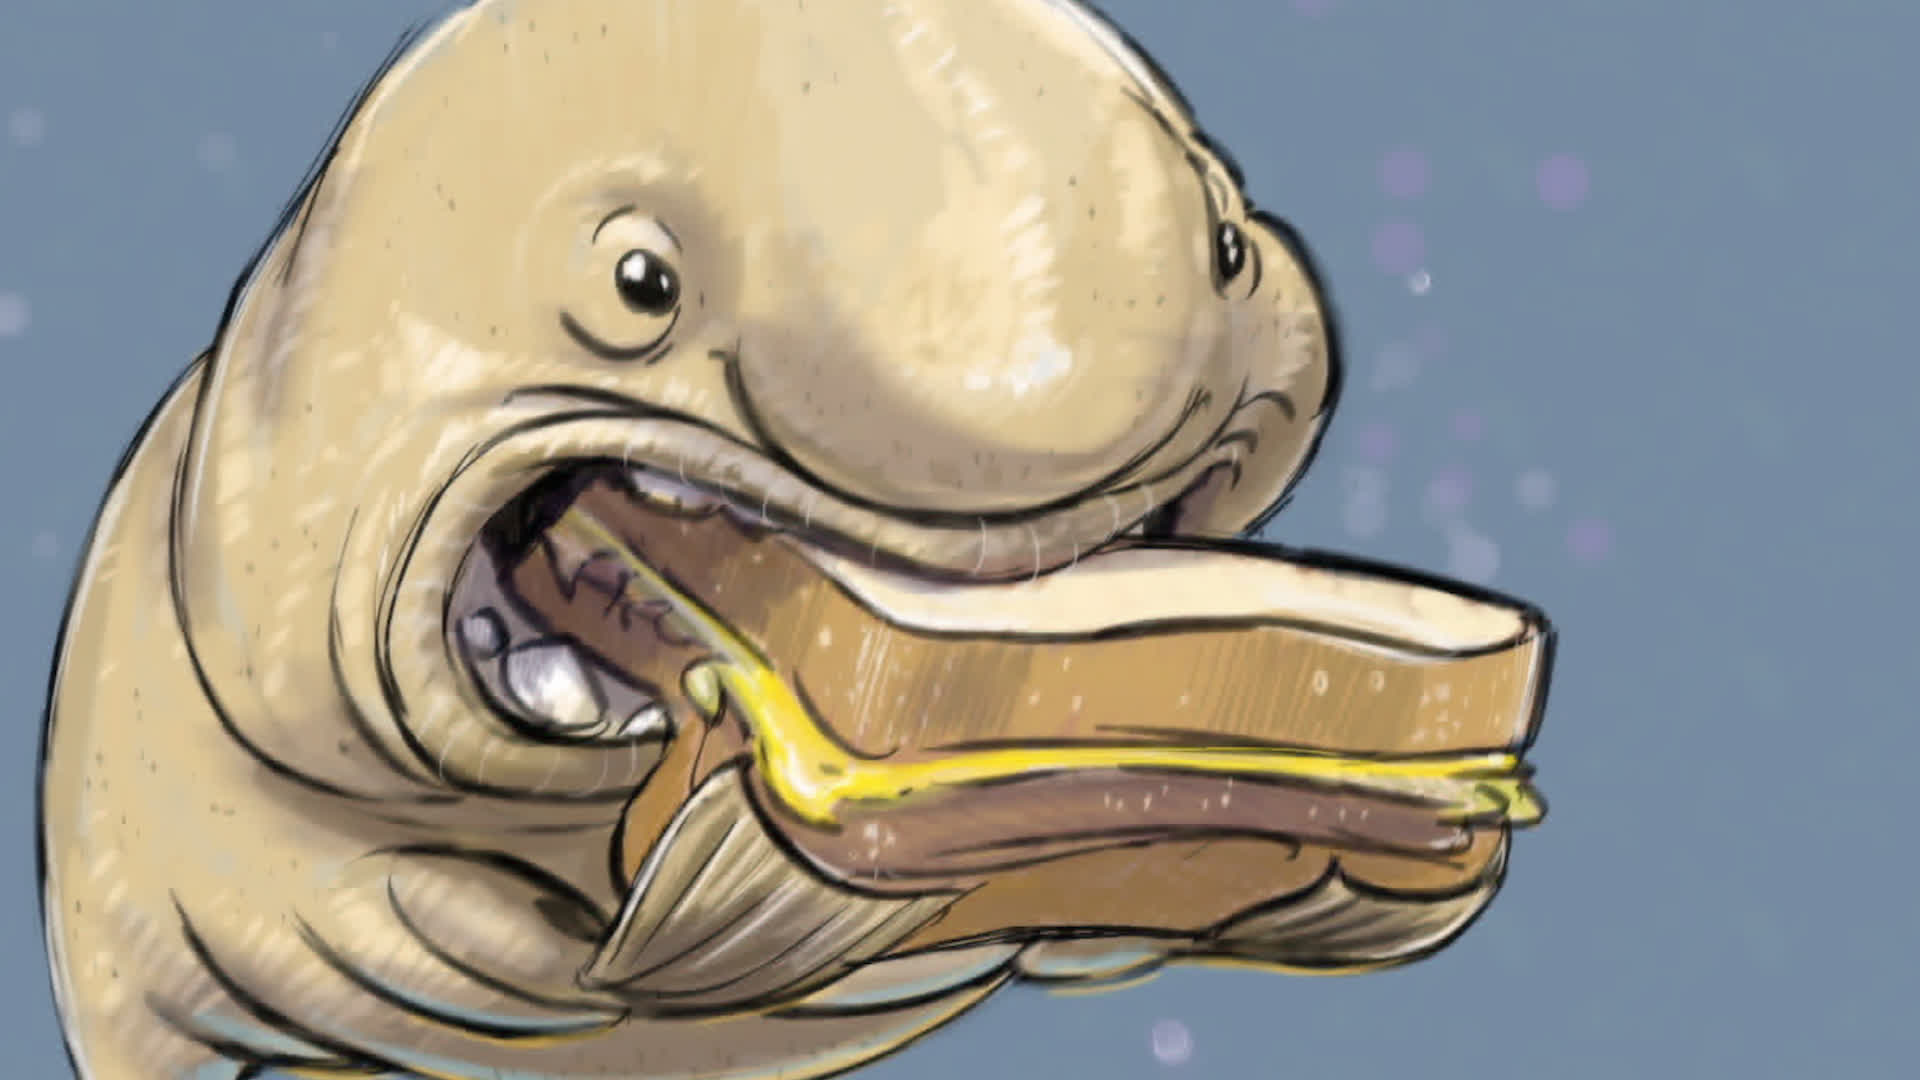 Blobfish eating a sandwich